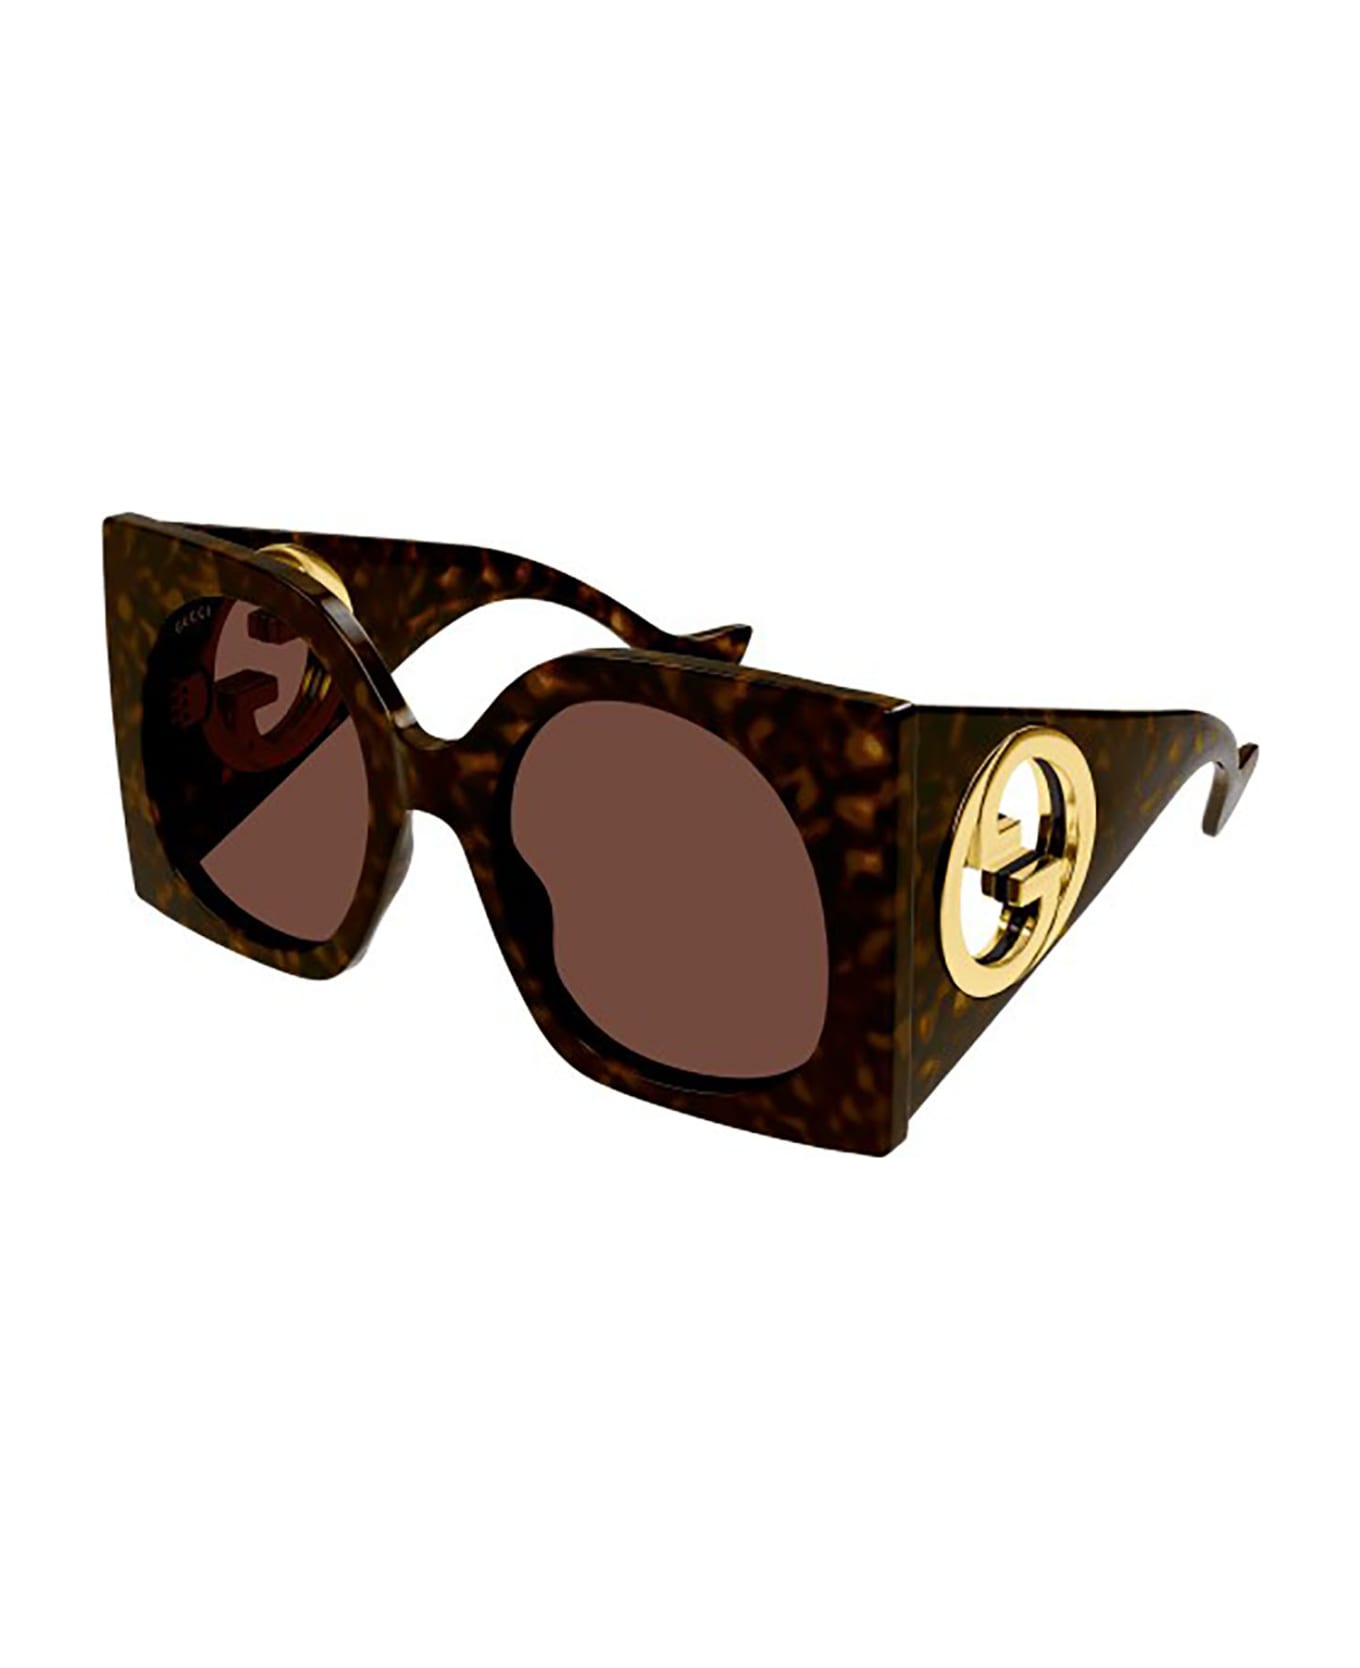 Gucci Eyewear GG1254S Sunglasses - Havana Havana Brown